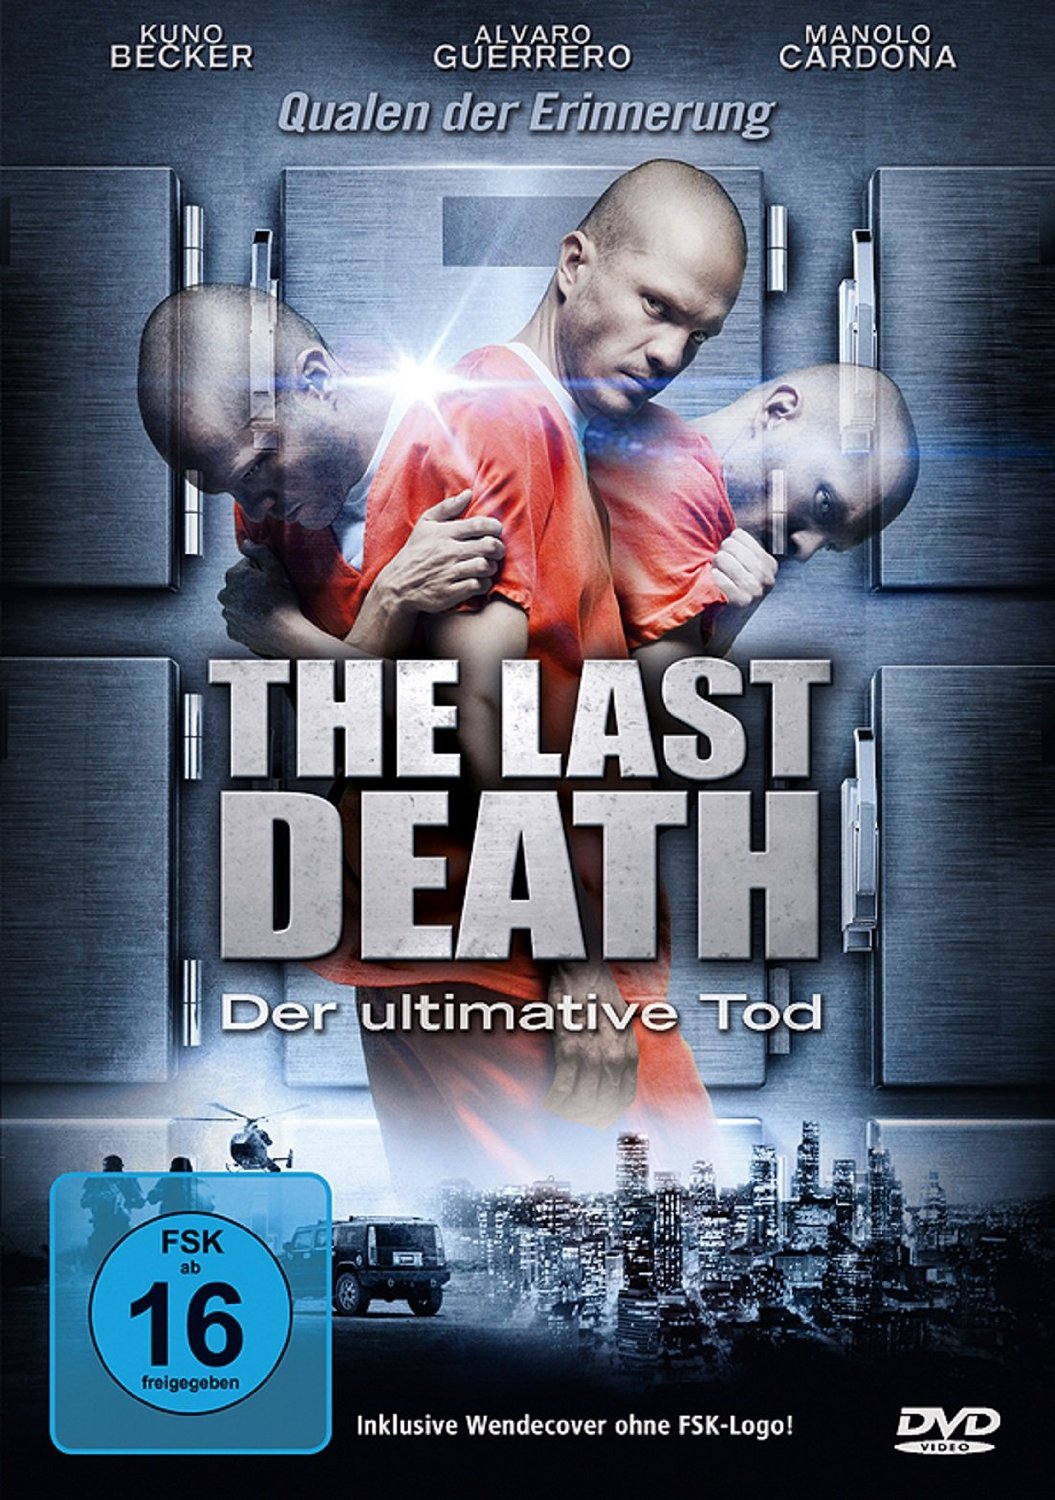 The Last Death